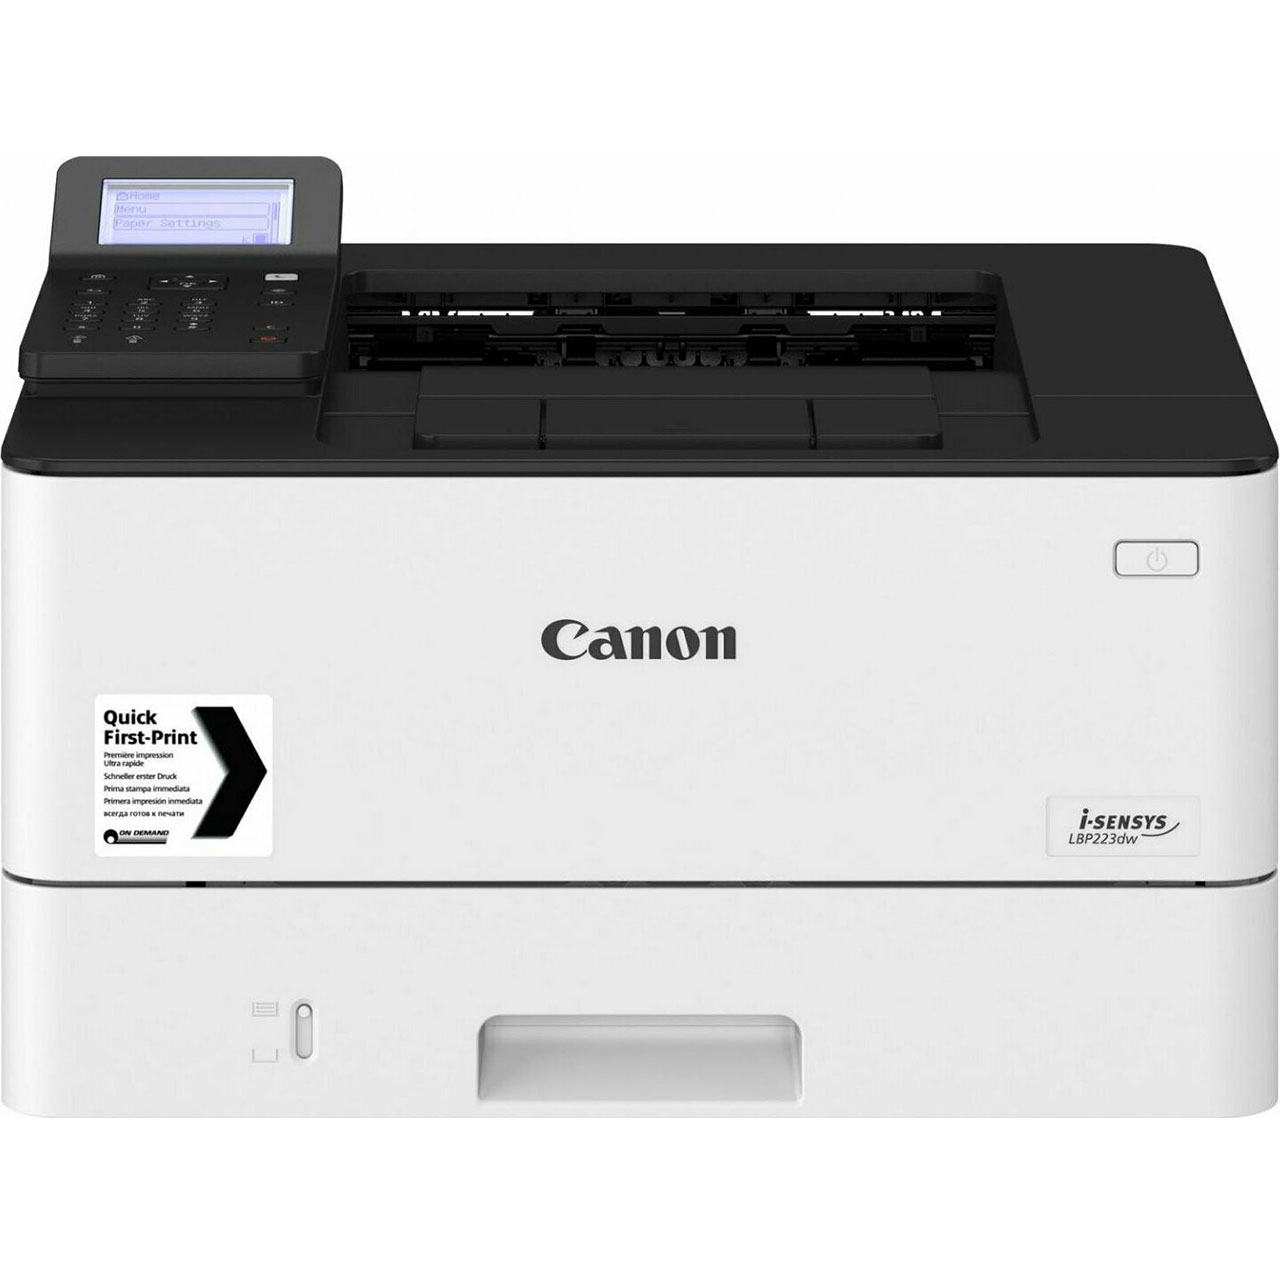 Toner cartridge compatible with Canon i-SENSYS LBP223dw